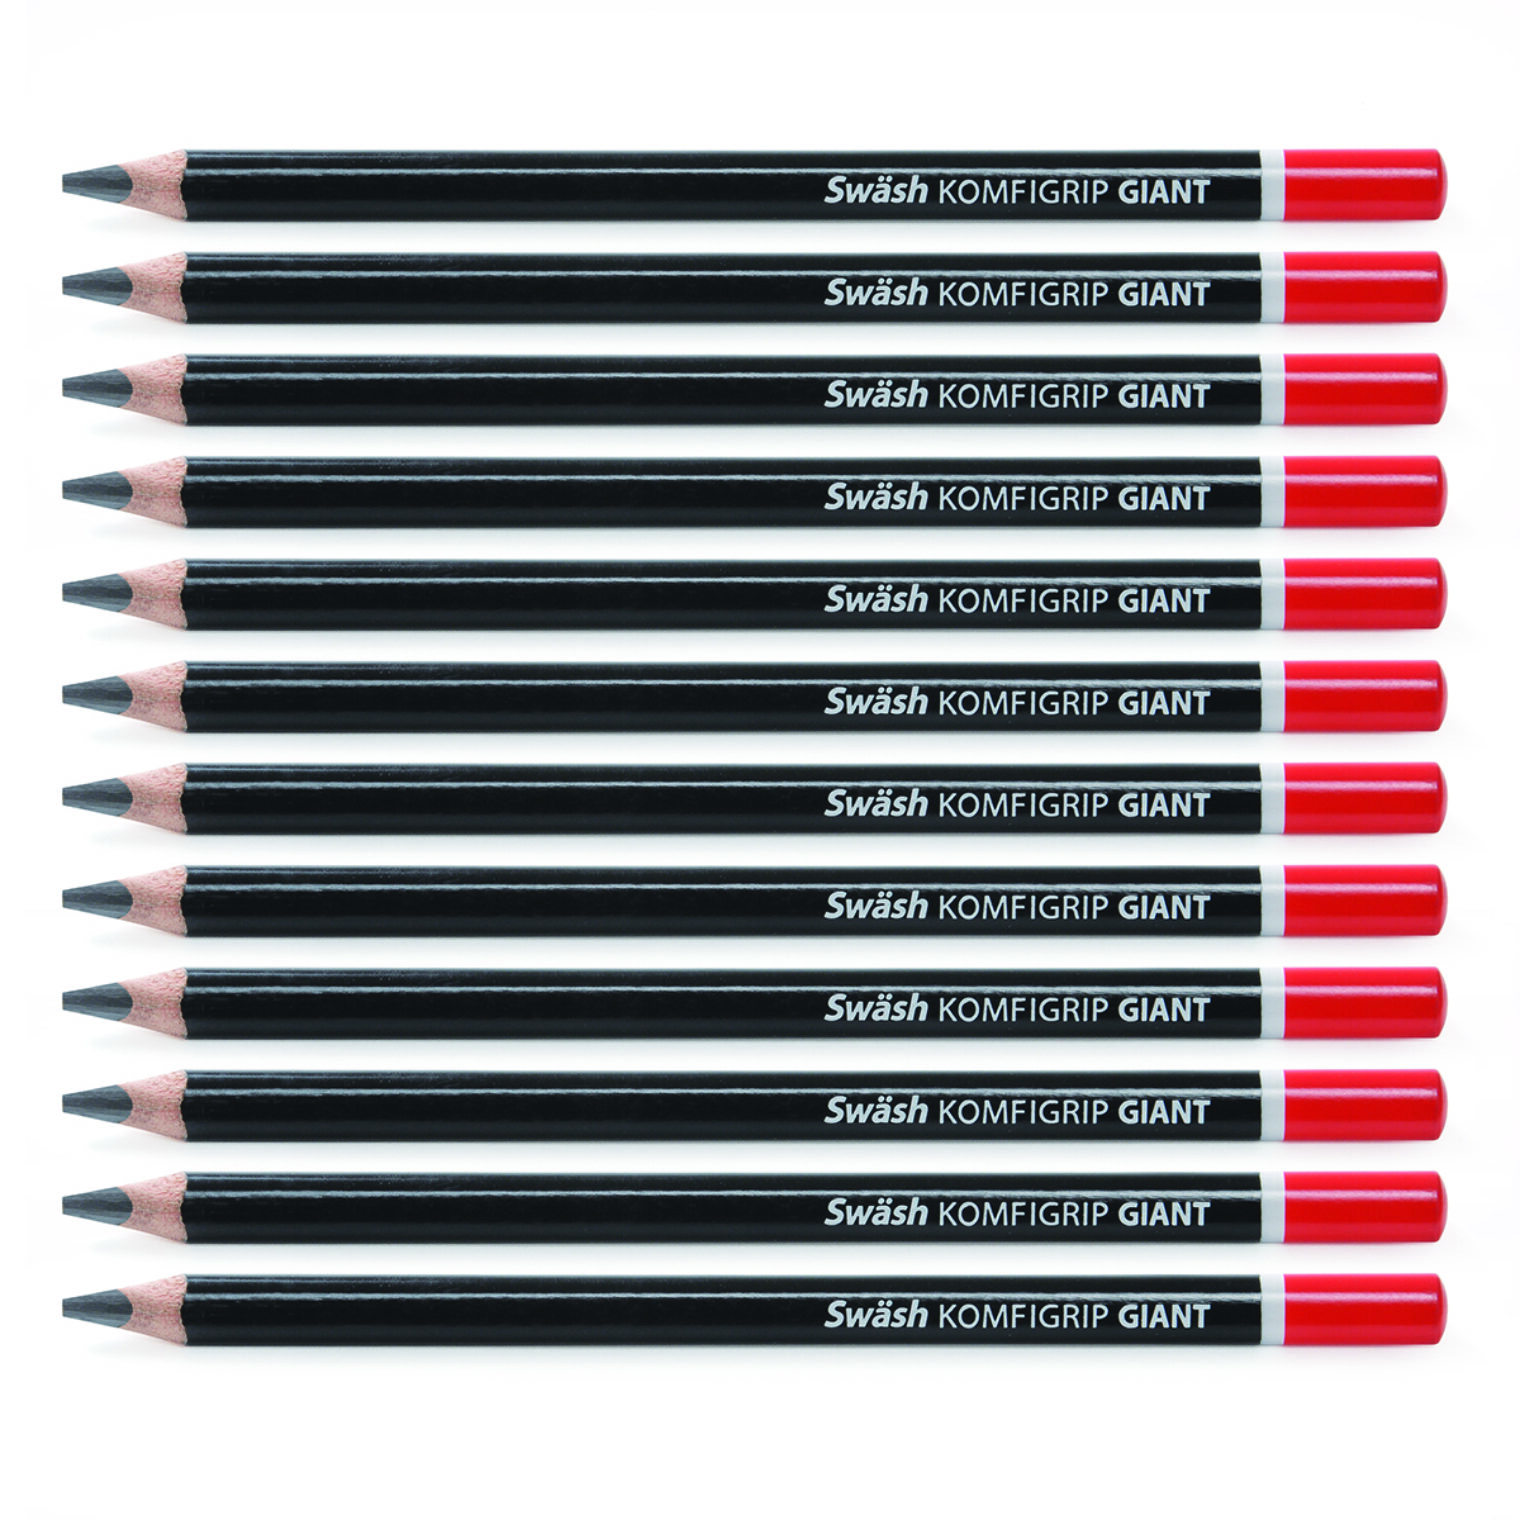 Swäsh KOMFIGRIP Giant HB Graphite Pencils